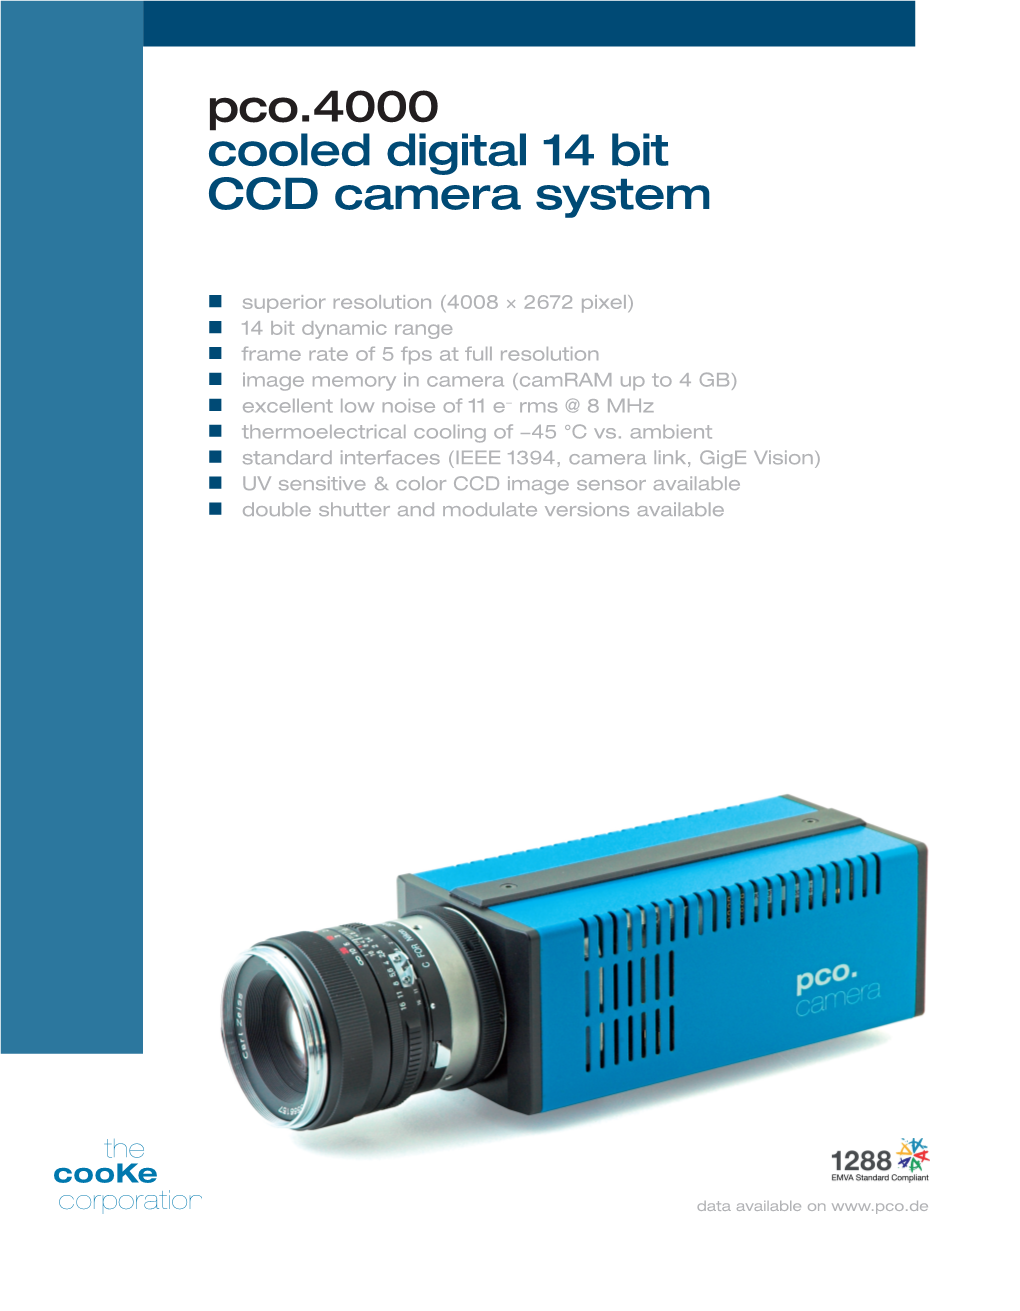 Pco.4000 Cooled Digital 14 Bit CCD Camera System